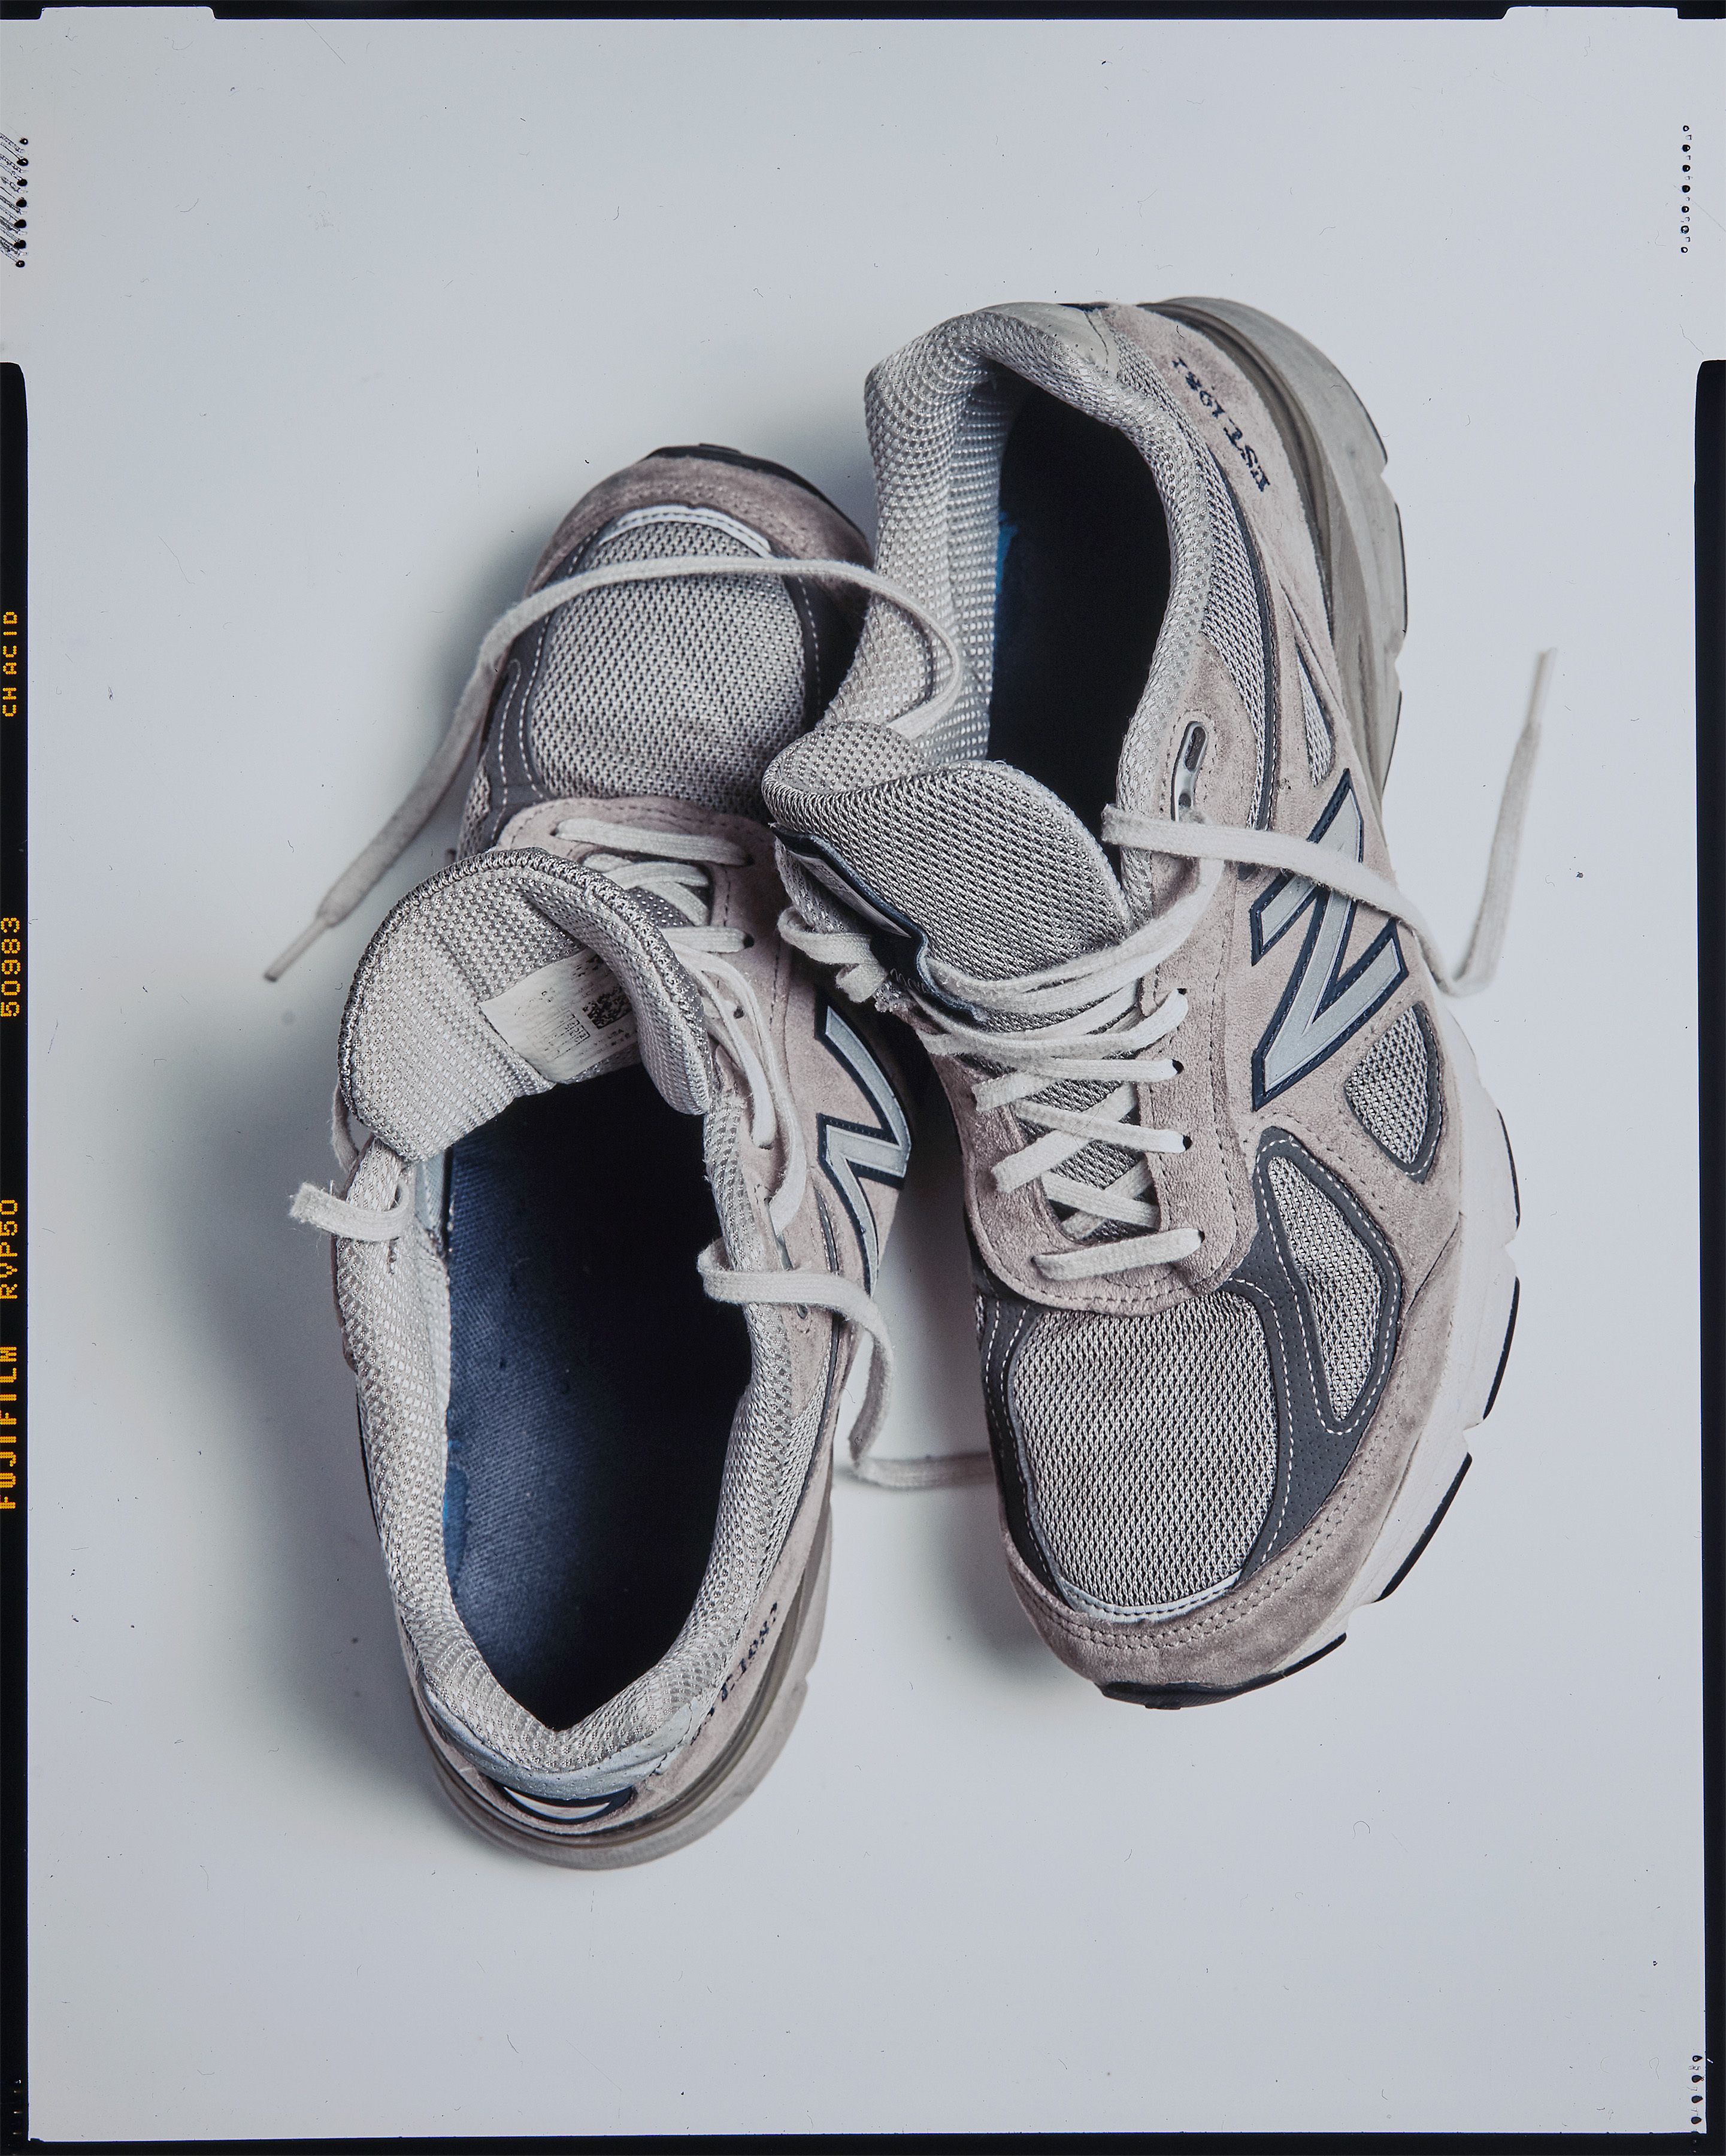 Hertellen Vereniging pop Dad Shoes: The Case for New Balance 990 Sneakers